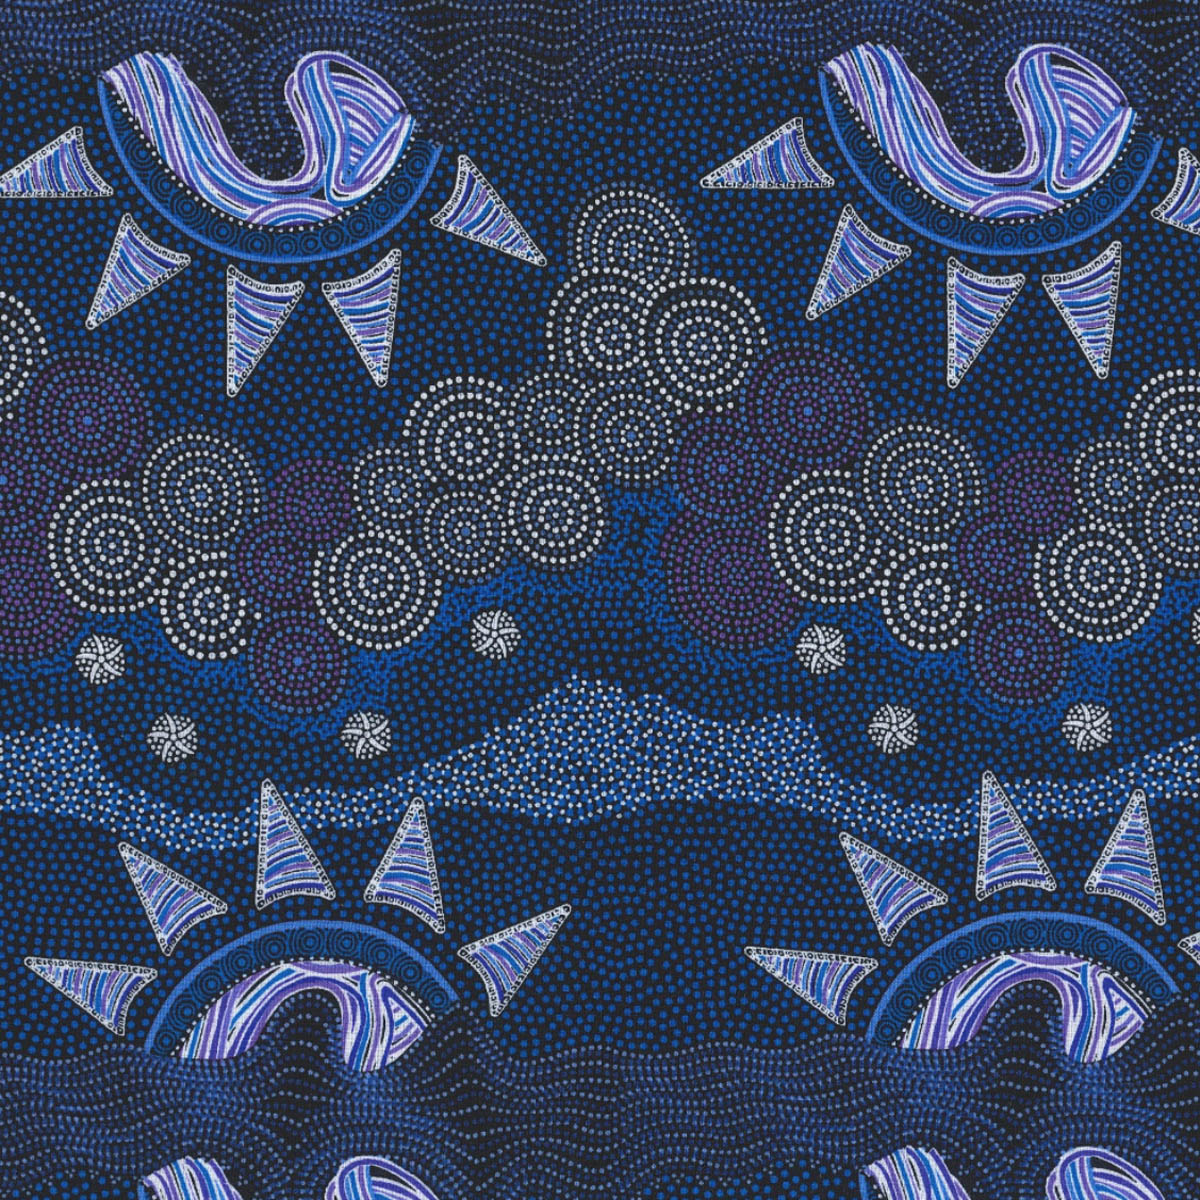 SUNSET NIGHT DREAMING BLUE by Aboriginal Artist Heather Kennedy